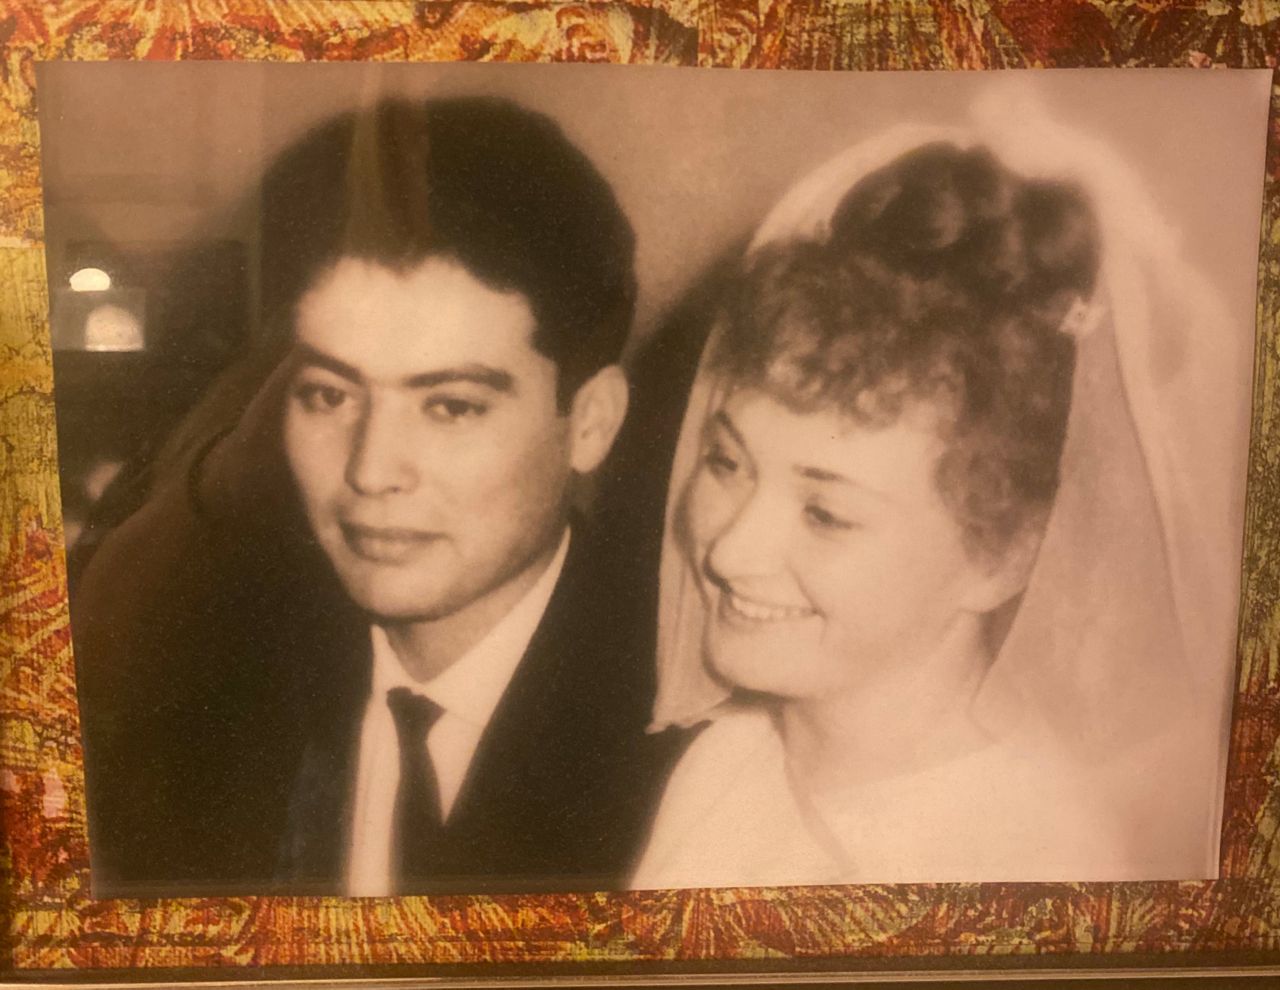 A photo Edgar and Sofiya on their wedding day, 60 years ago this October.